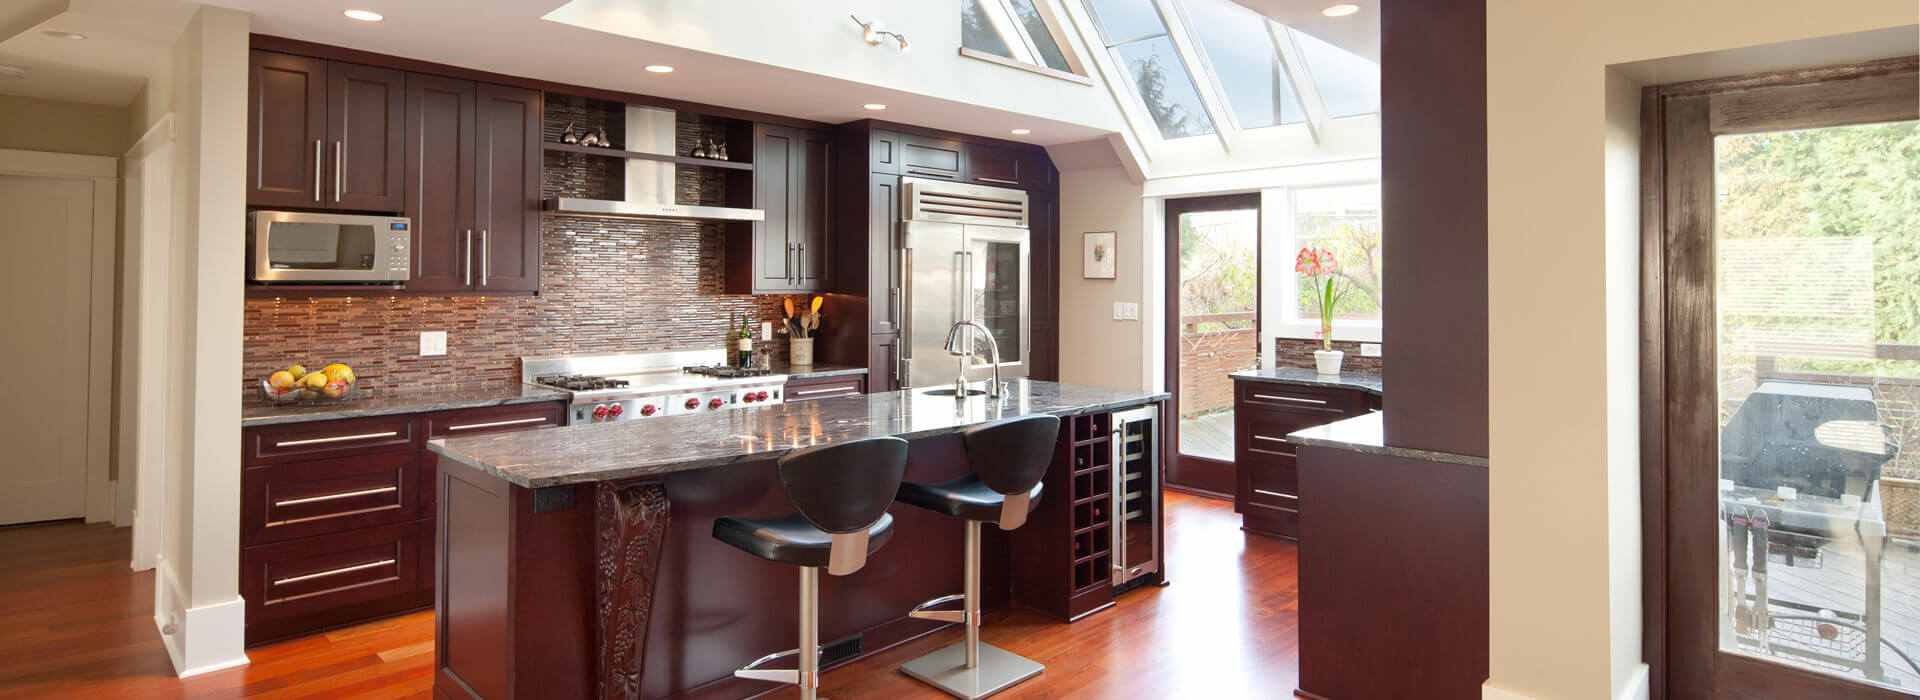 Vaulted Kitchen Ceiling Makes Rich Dark Cabinetry Pop